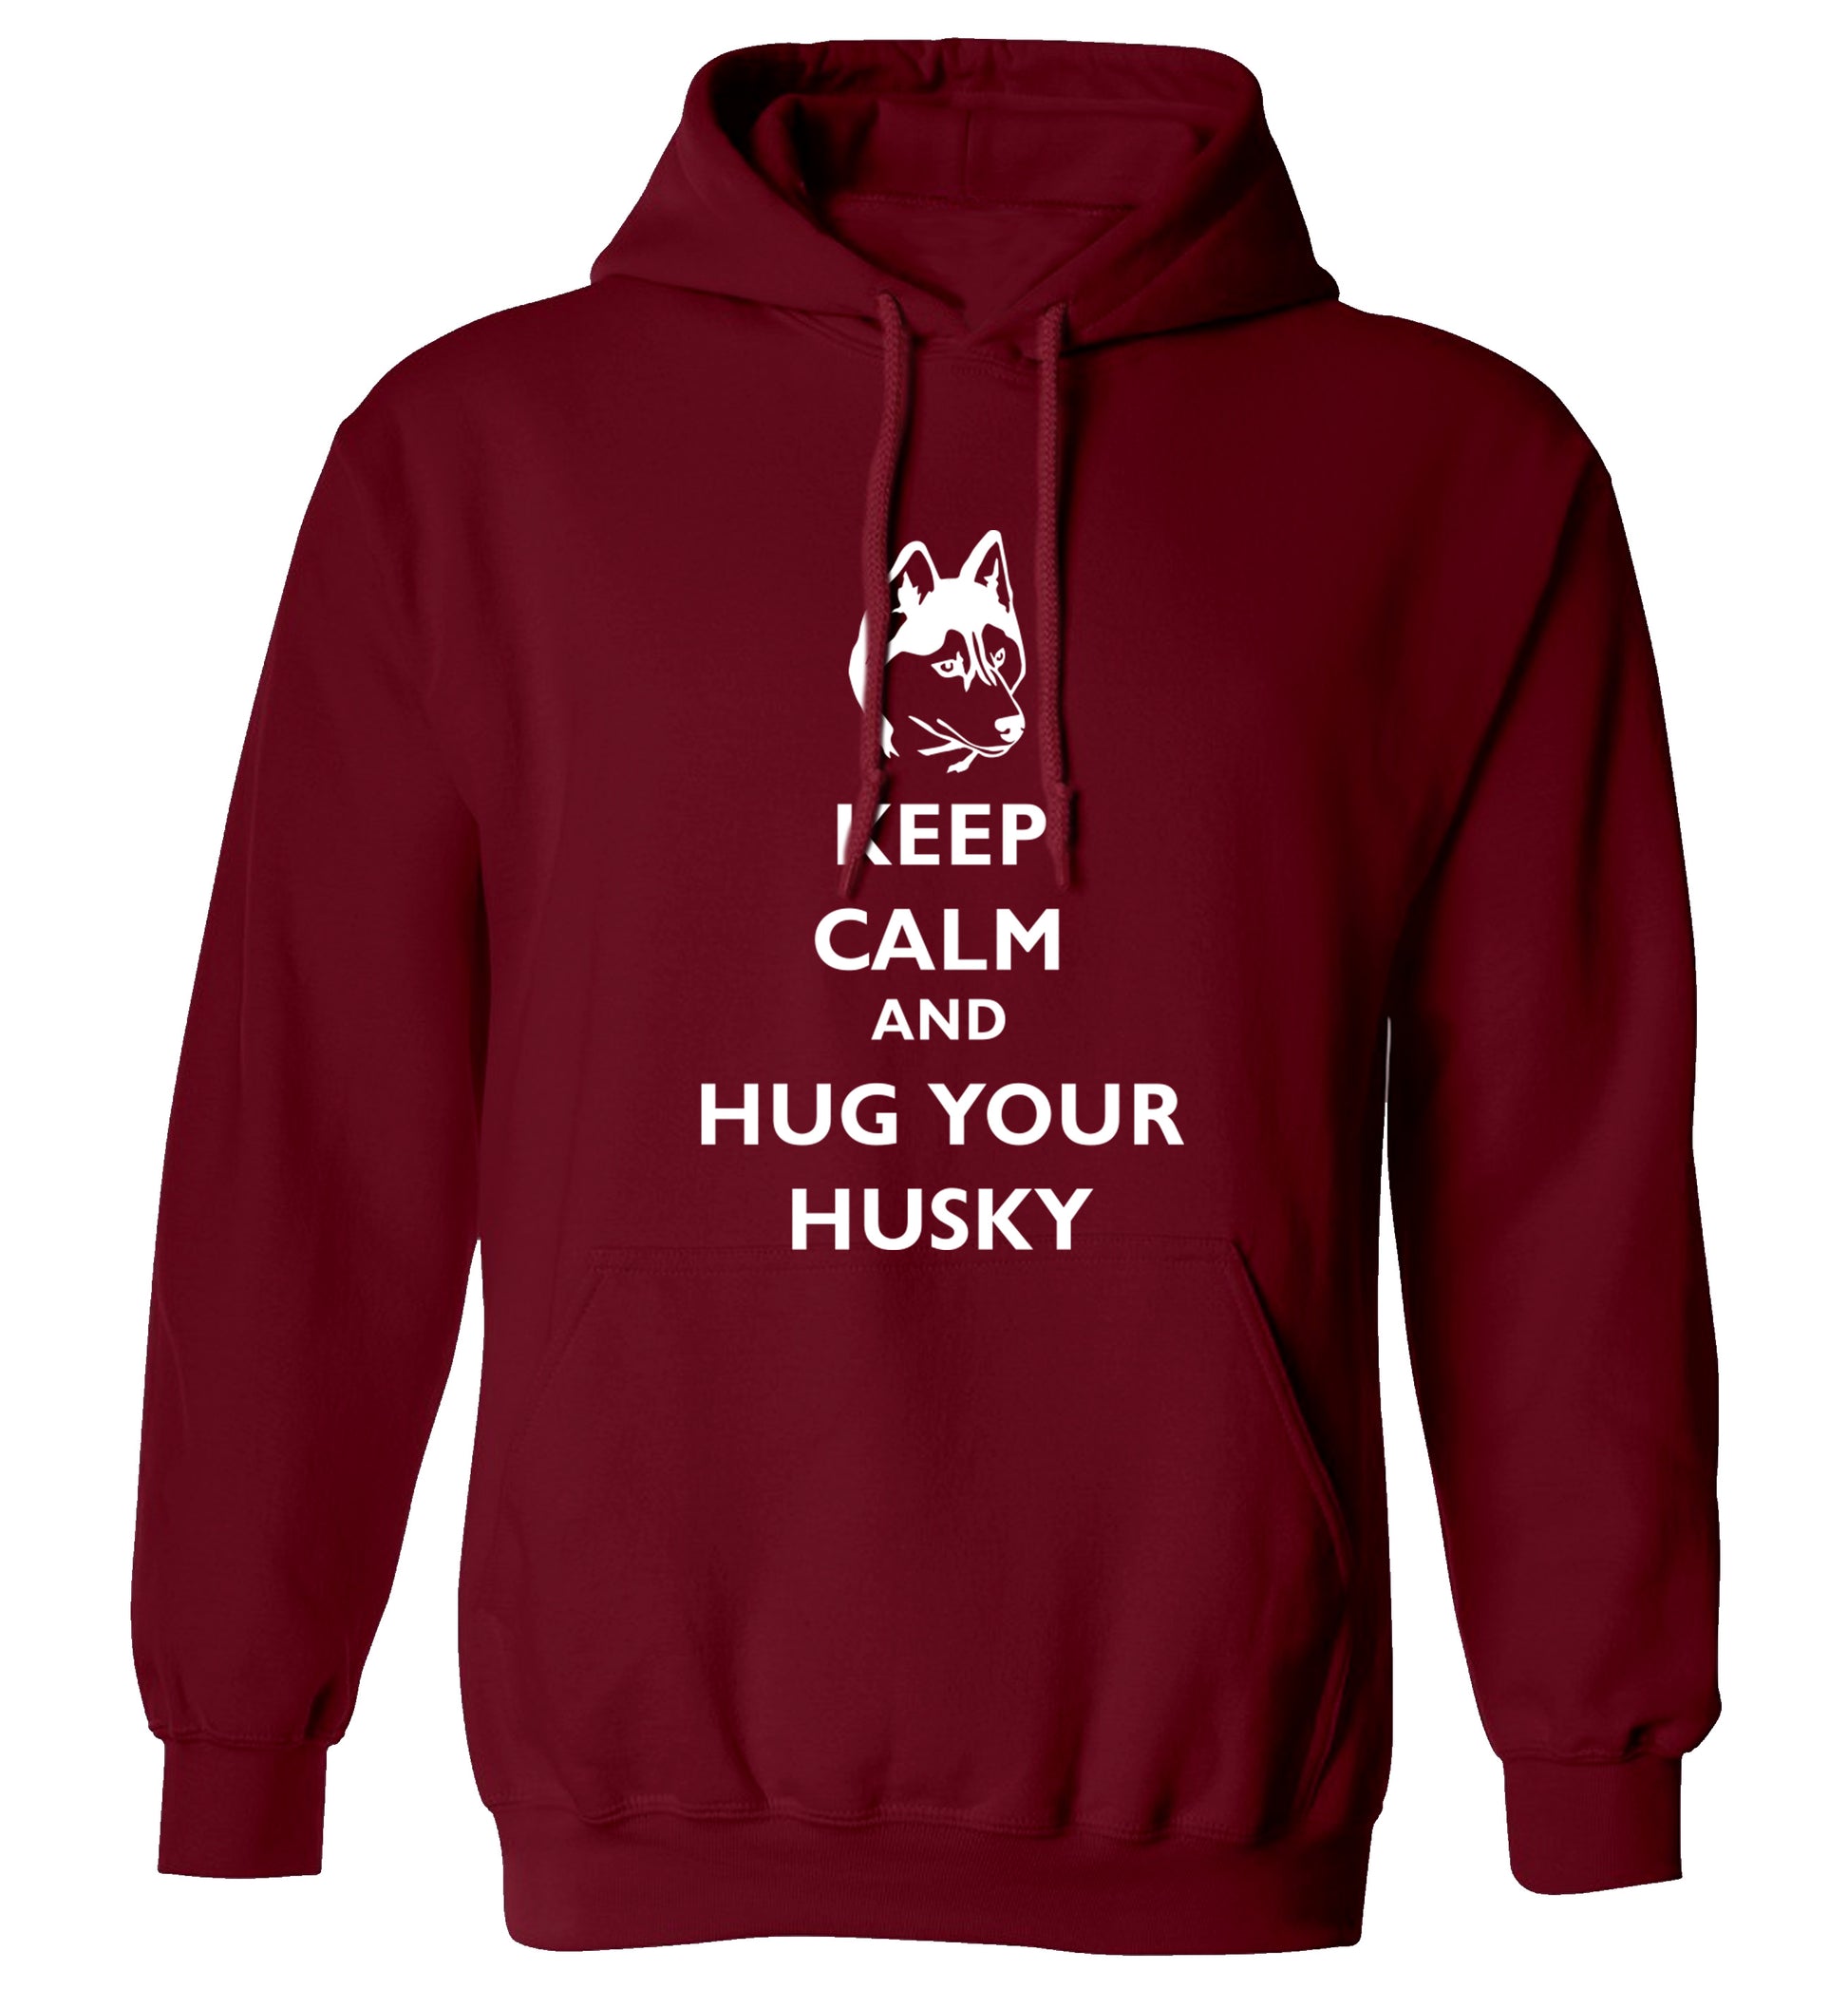 Keep calm and hug your husky adults unisex maroon hoodie 2XL